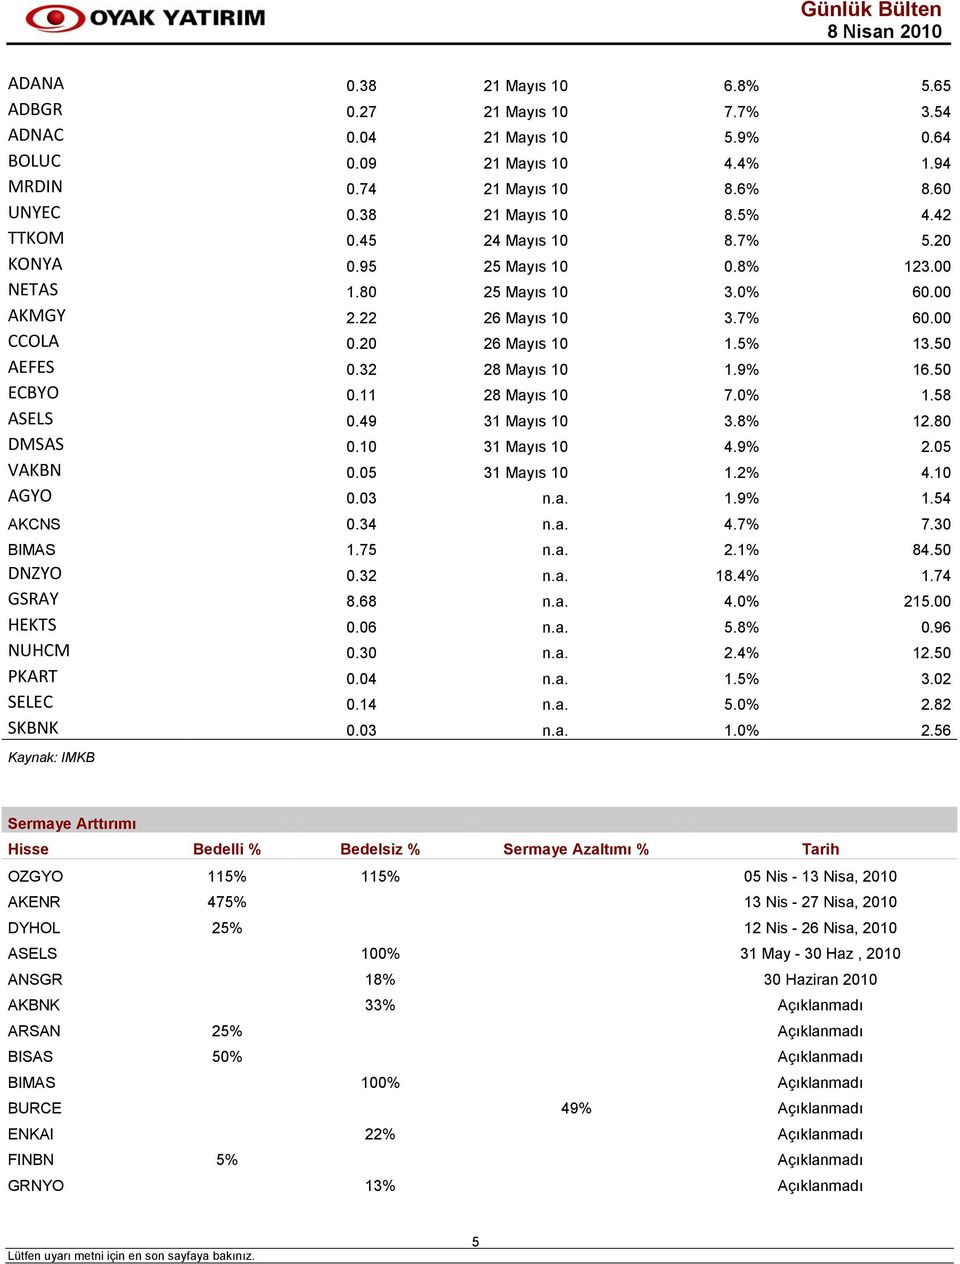 9% 16.50 ECBYO 0.11 28 Mayıs 10 7.0% 1.58 ASELS 0.49 31 Mayıs 10 3.8% 12.80 DMSAS 0.10 31 Mayıs 10 4.9% 2.05 VAKBN 0.05 31 Mayıs 10 1.2% 4.10 AGYO 0.03 n.a. 1.9% 1.54 AKCNS 0.34 n.a. 4.7% 7.